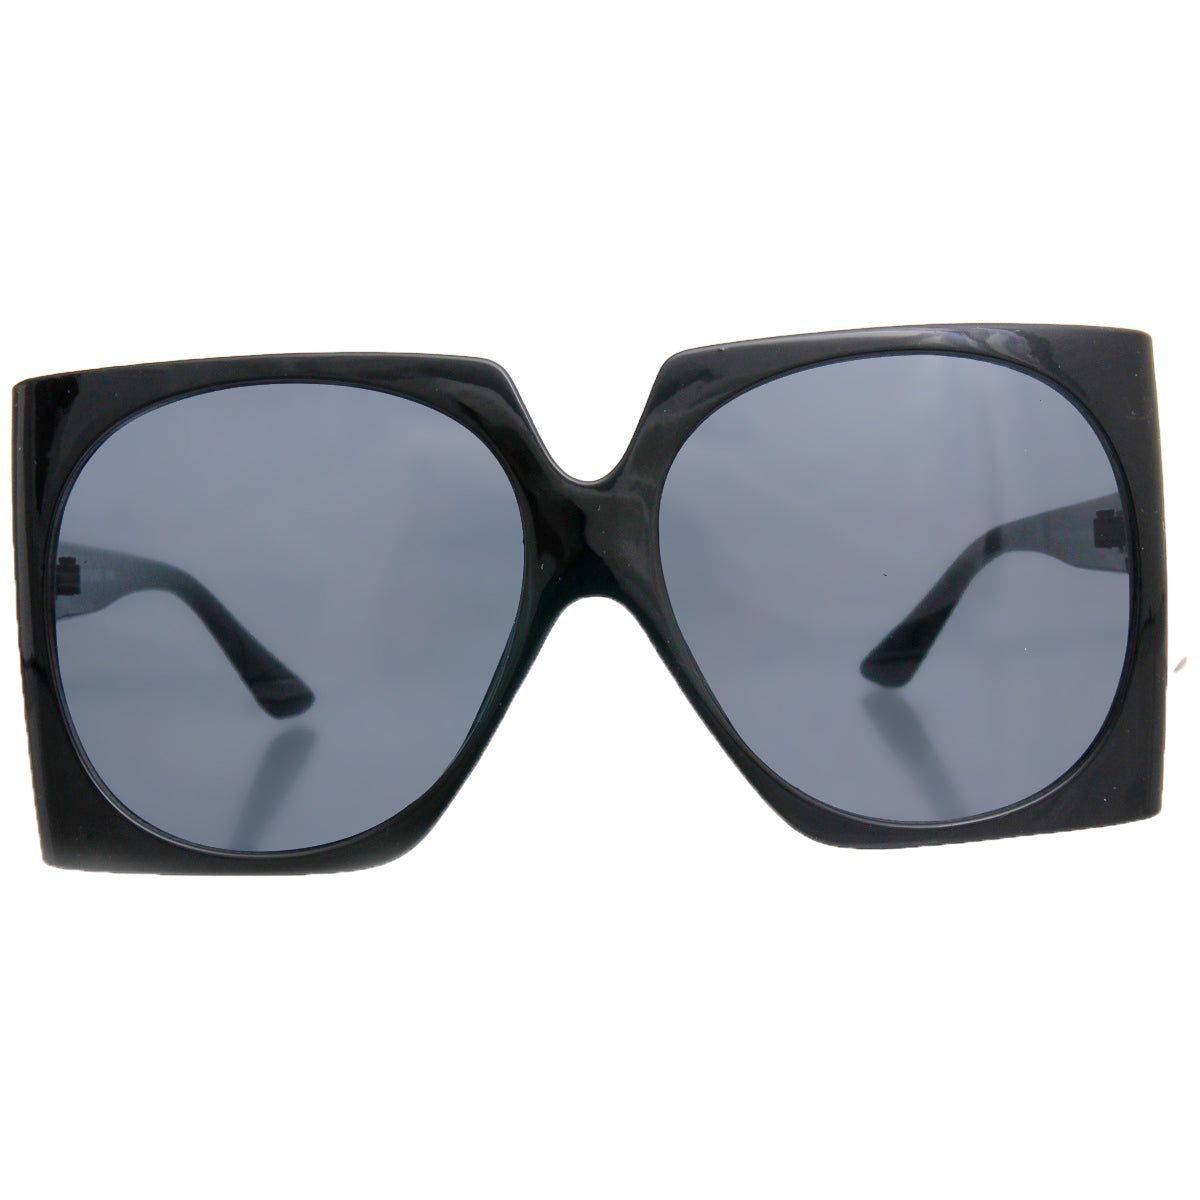 Blue Lens Square 70s Sunglasses